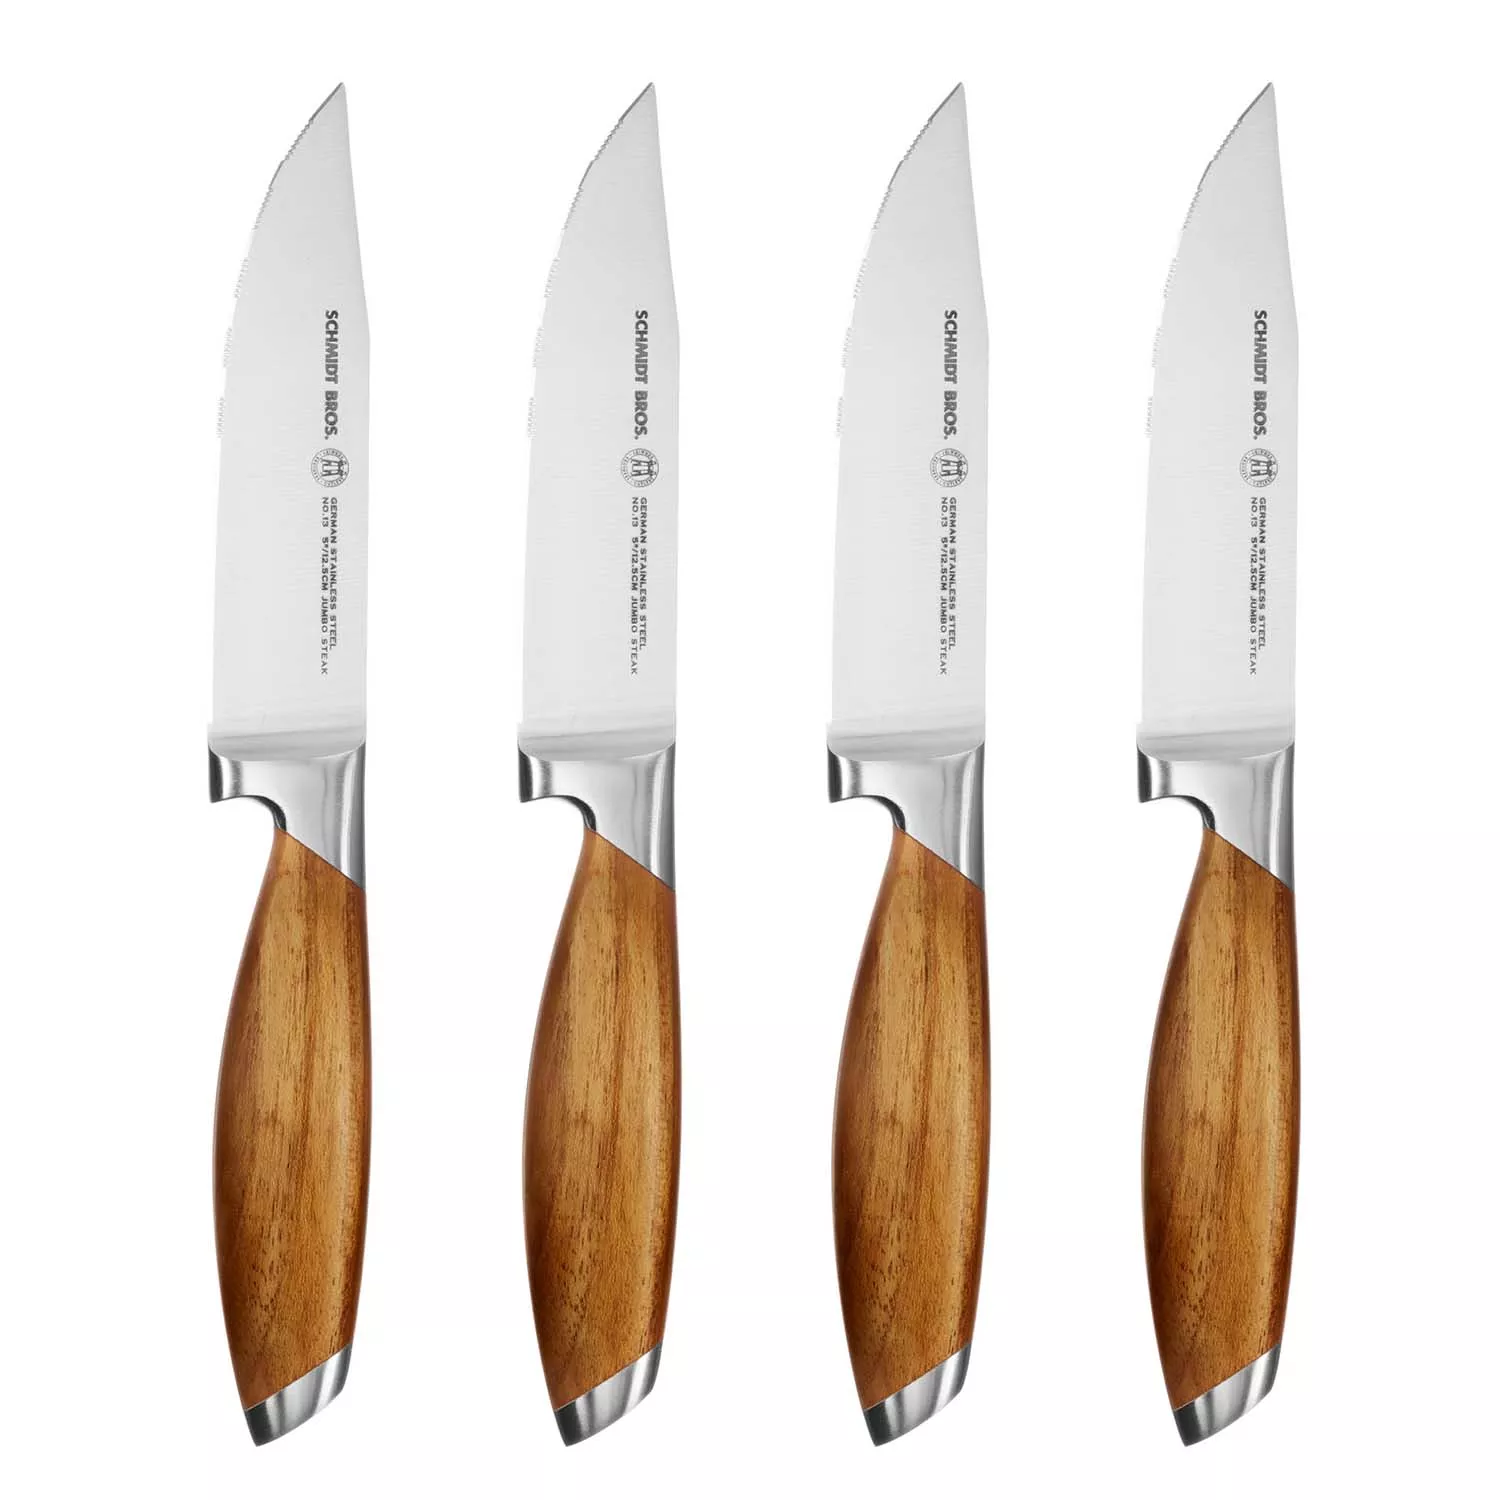 Schmidt Brothers Cutlery Bonded Teak Jumbo Steak Knives, Set of 4